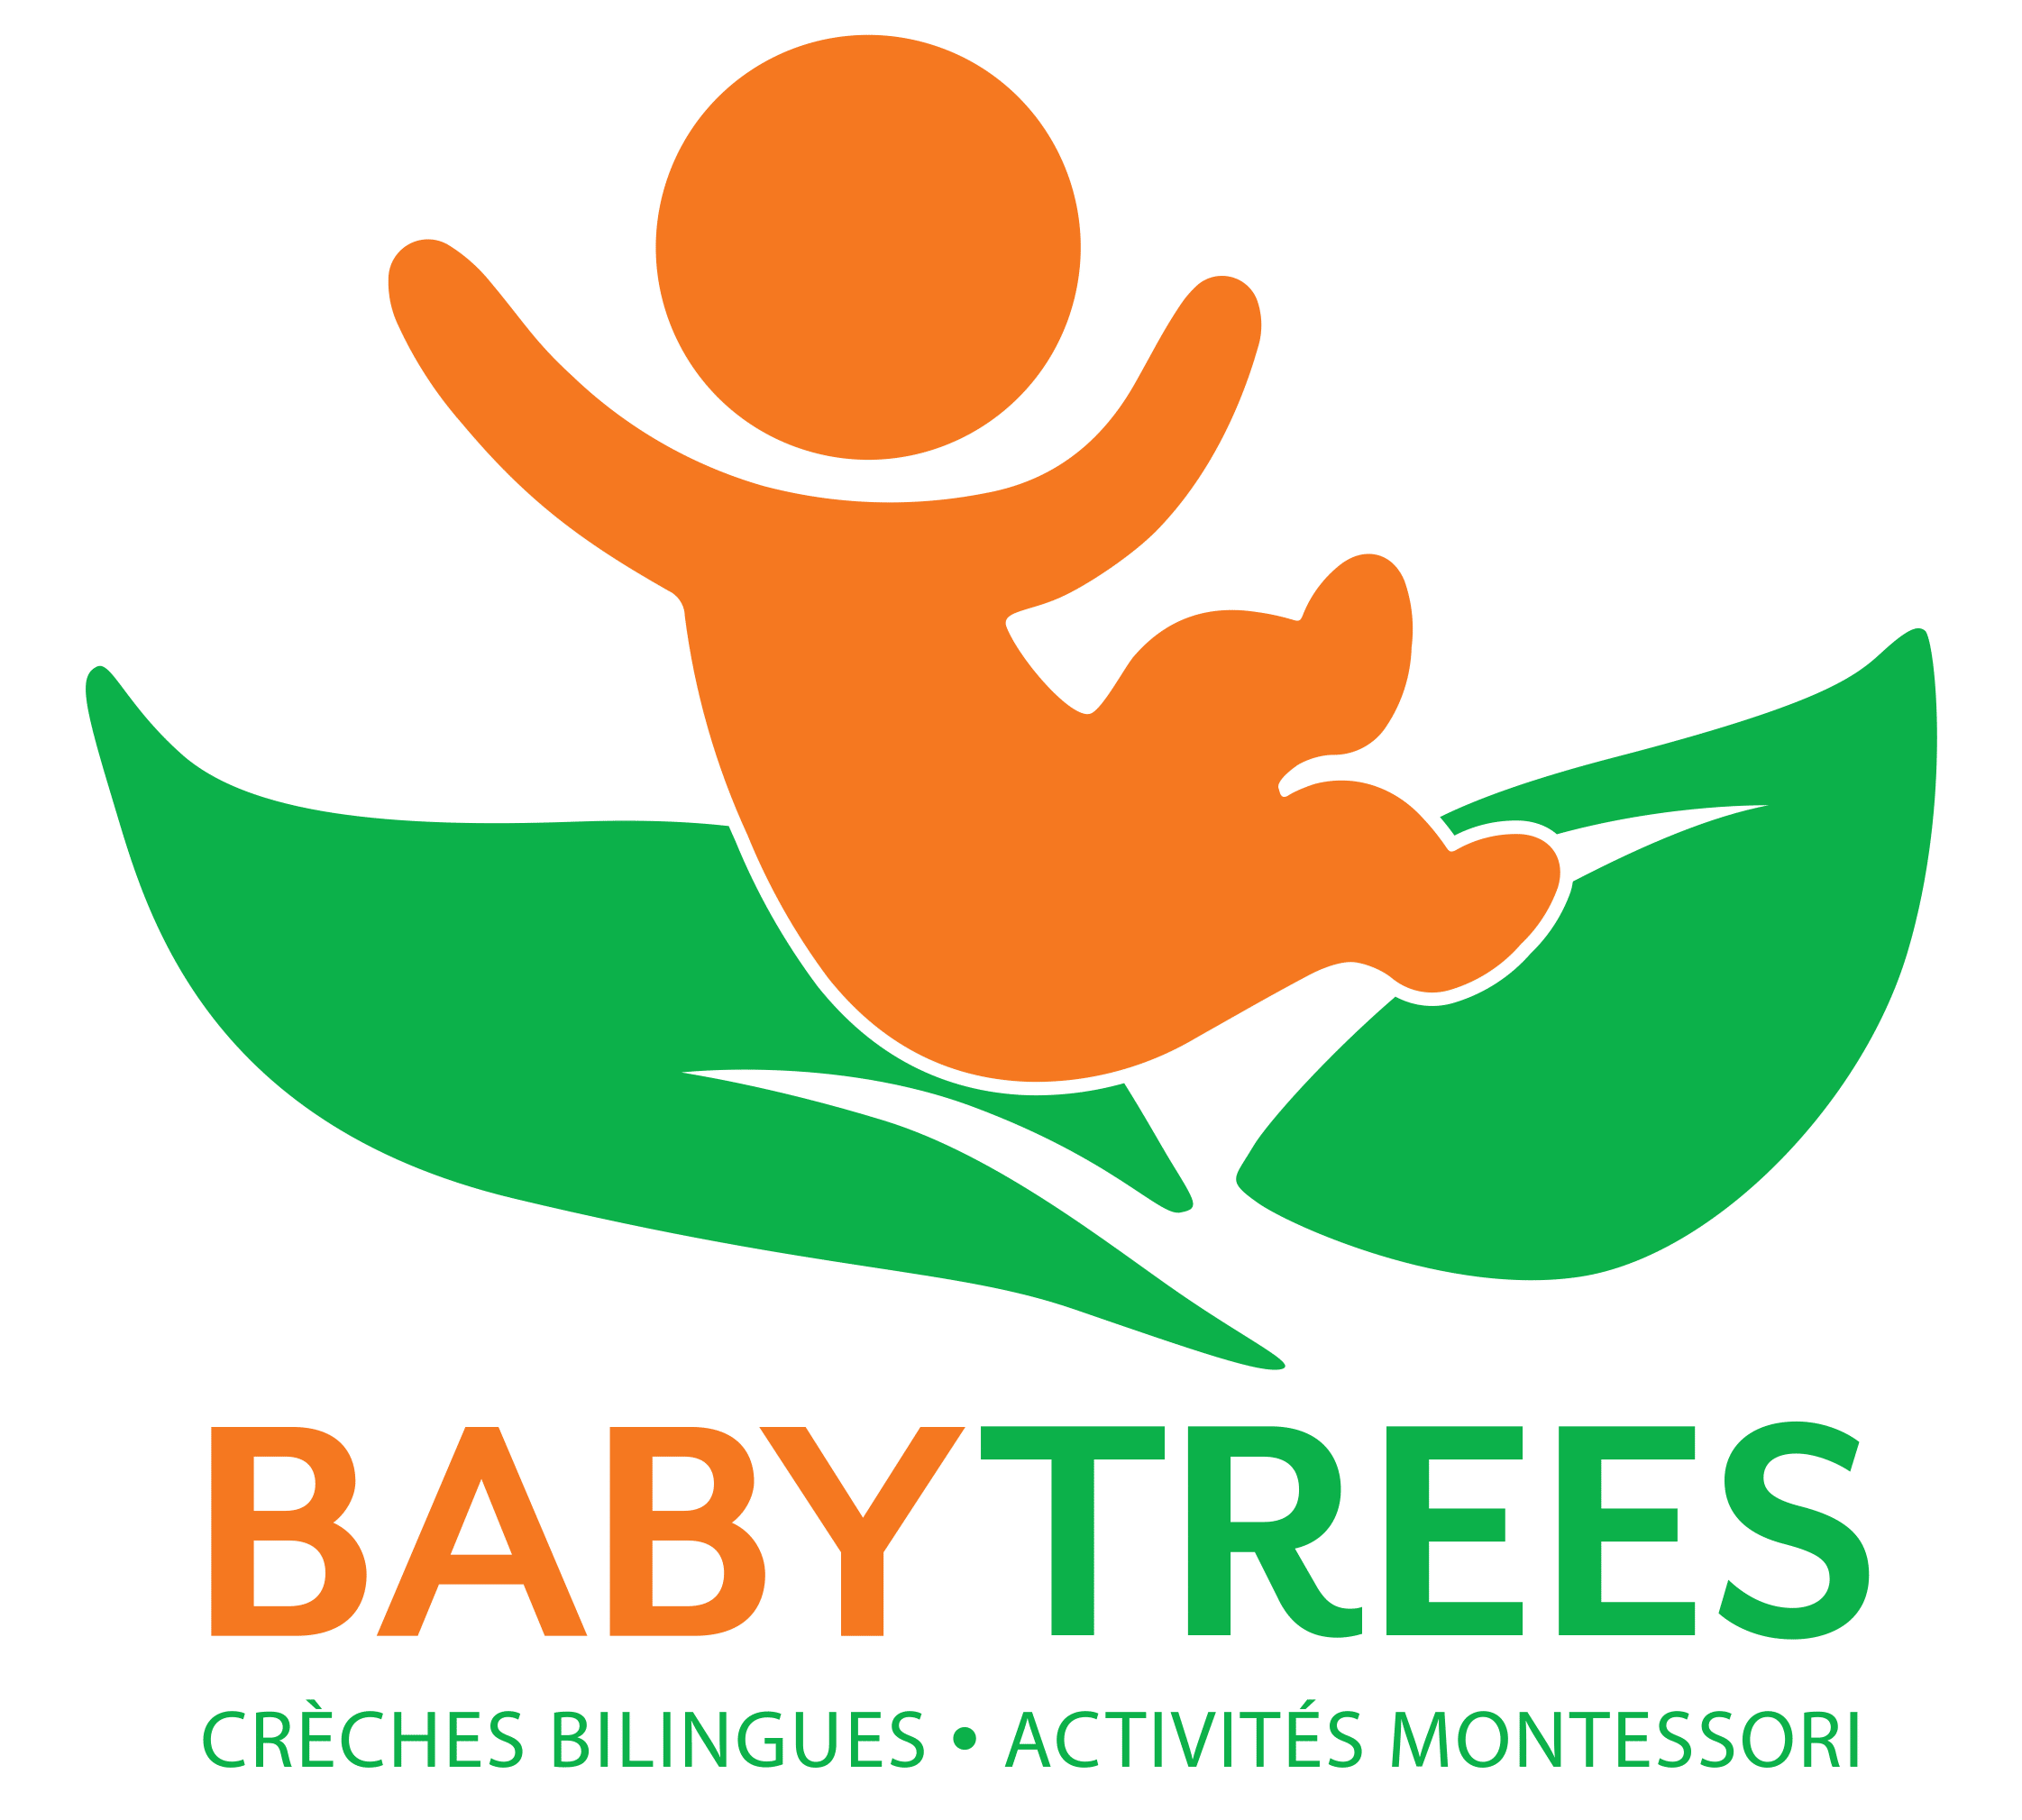 Reseau De Micro Creches Bilingues Avec Activites Montessori Baby Trees